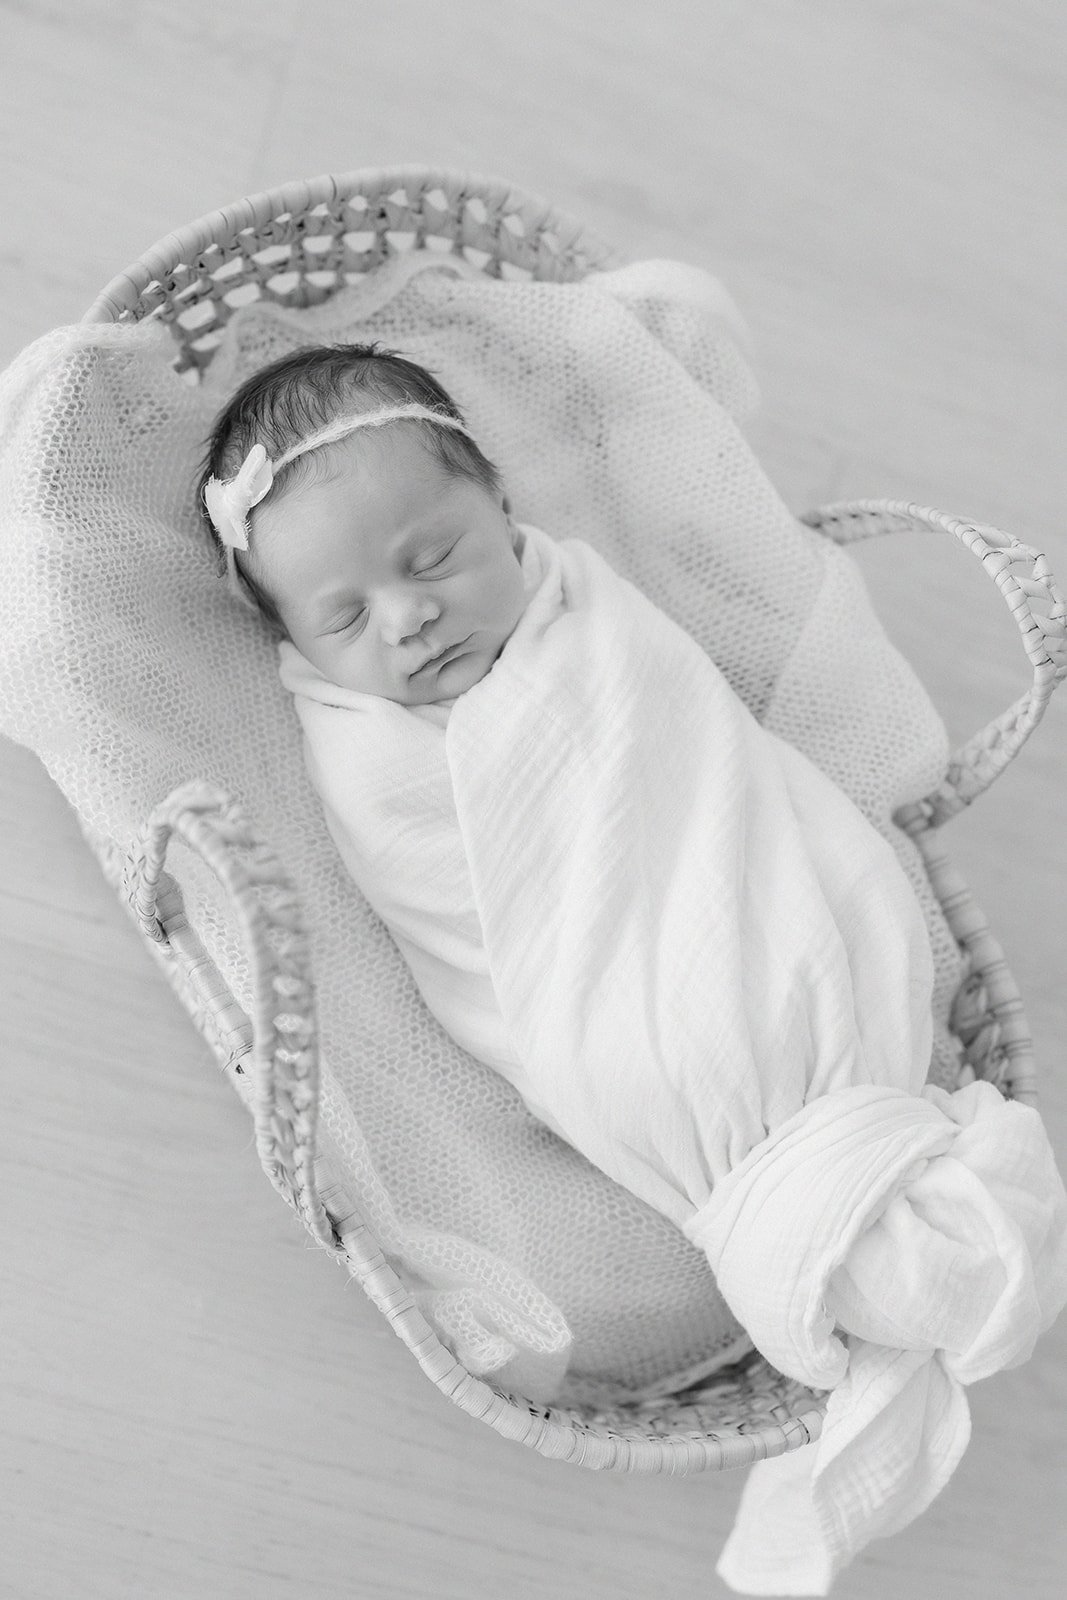 houston-newborn-photographer-kimberly-brooke-lifestlye-baby-355.jpg